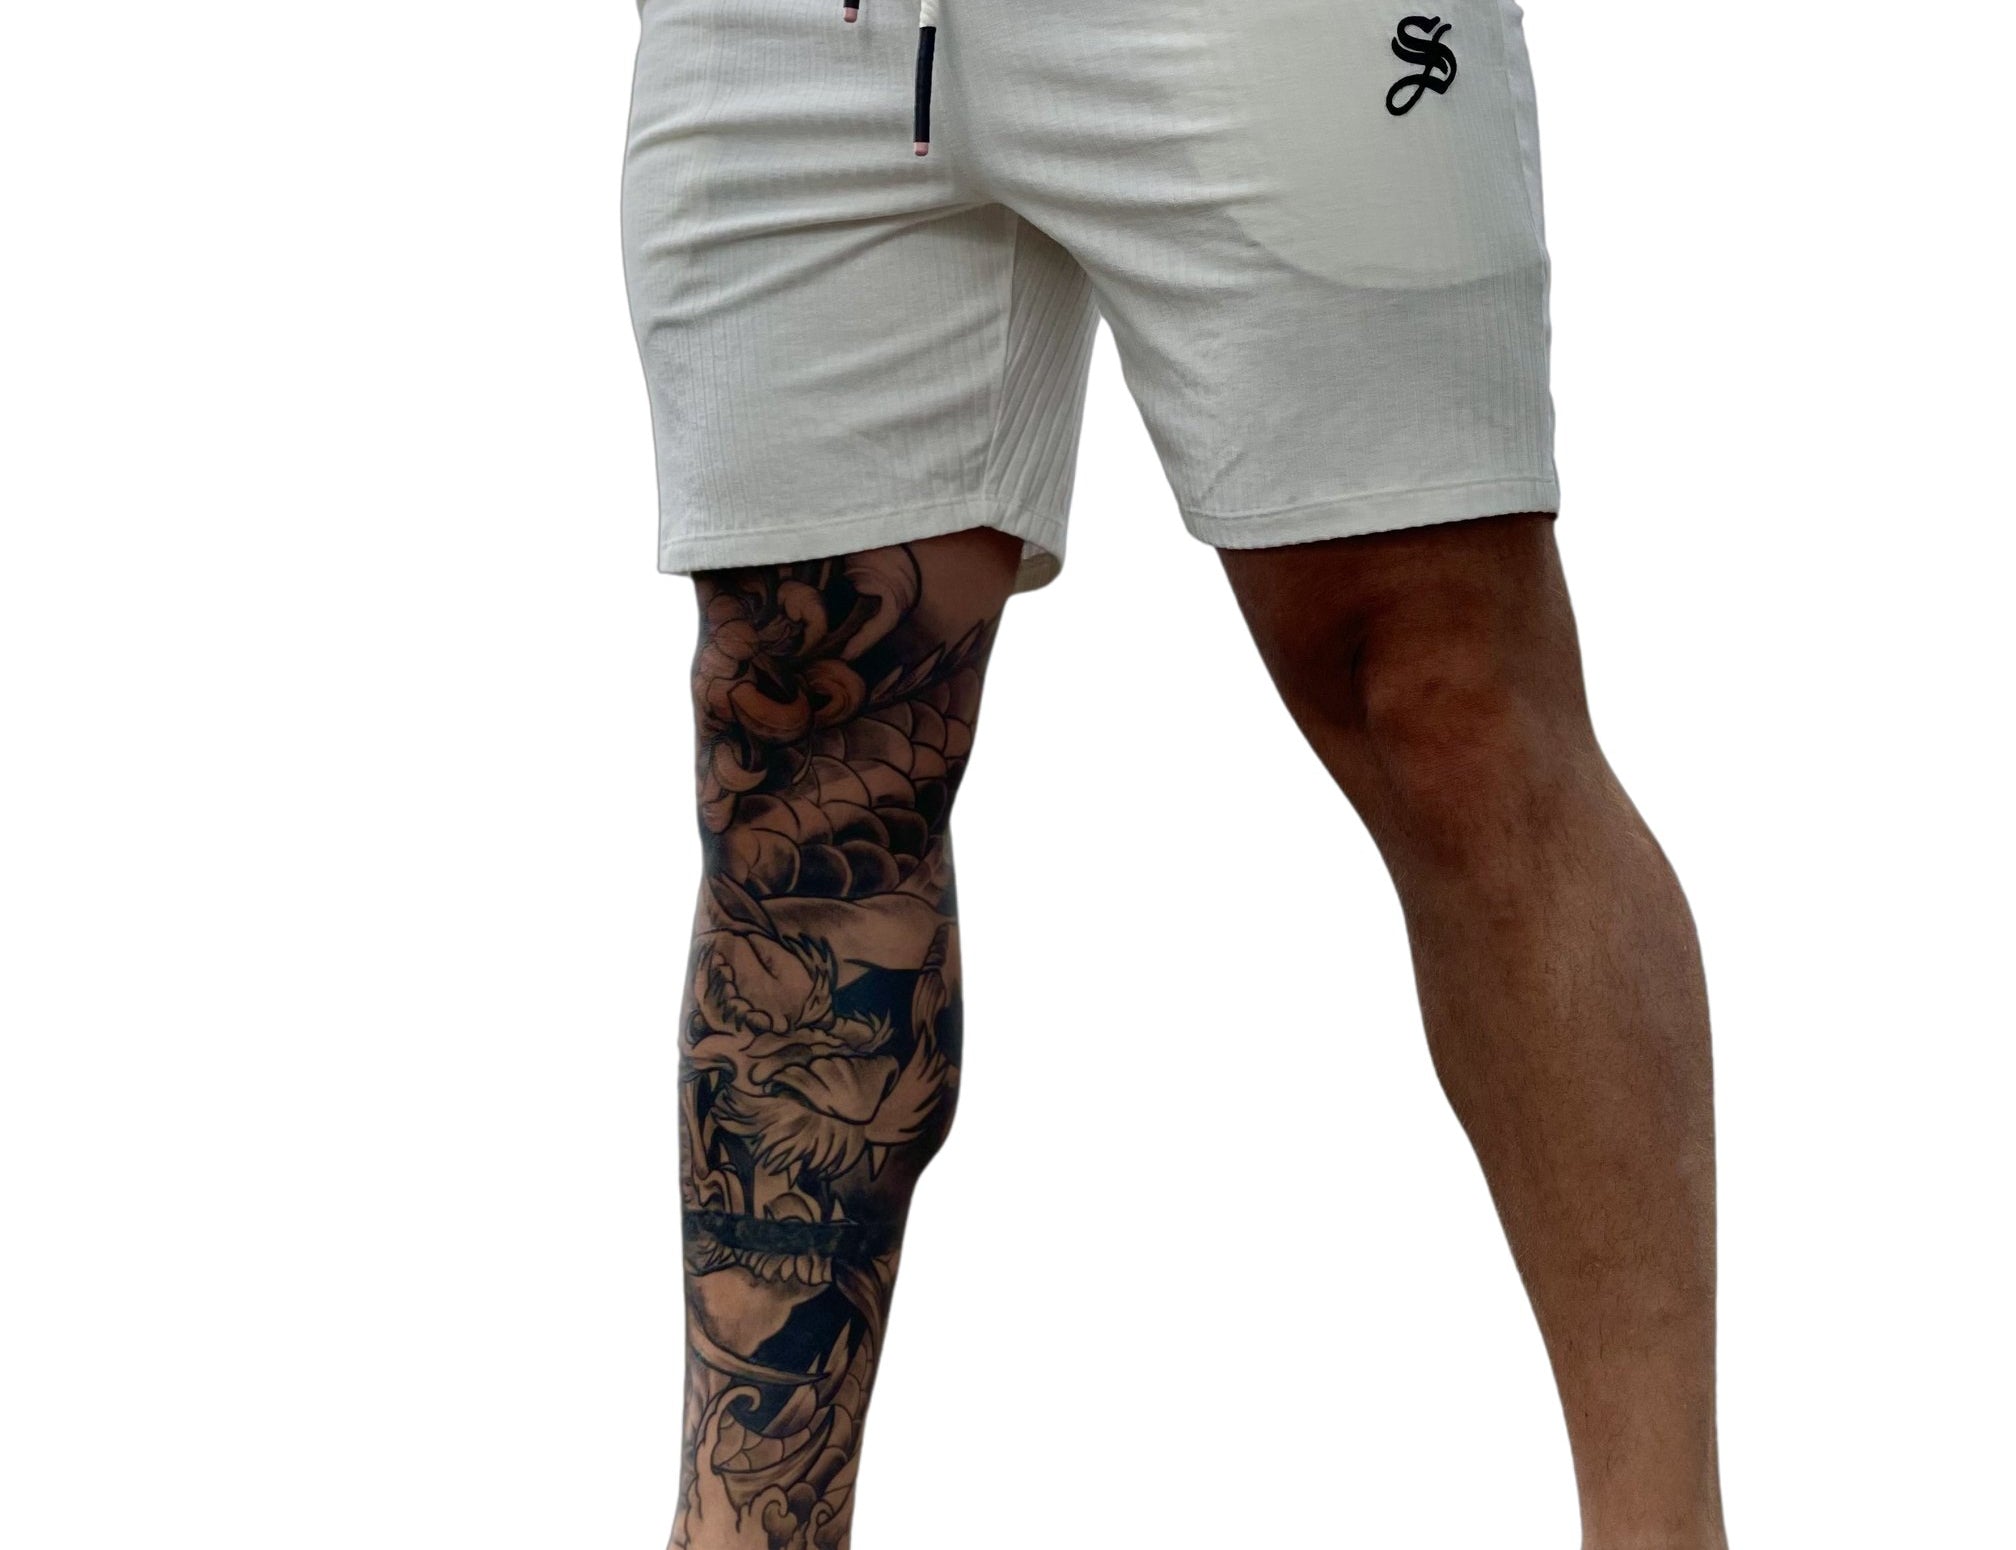 White Warrior - White Shorts for Men - Sarman Fashion - Wholesale Clothing Fashion Brand for Men from Canada